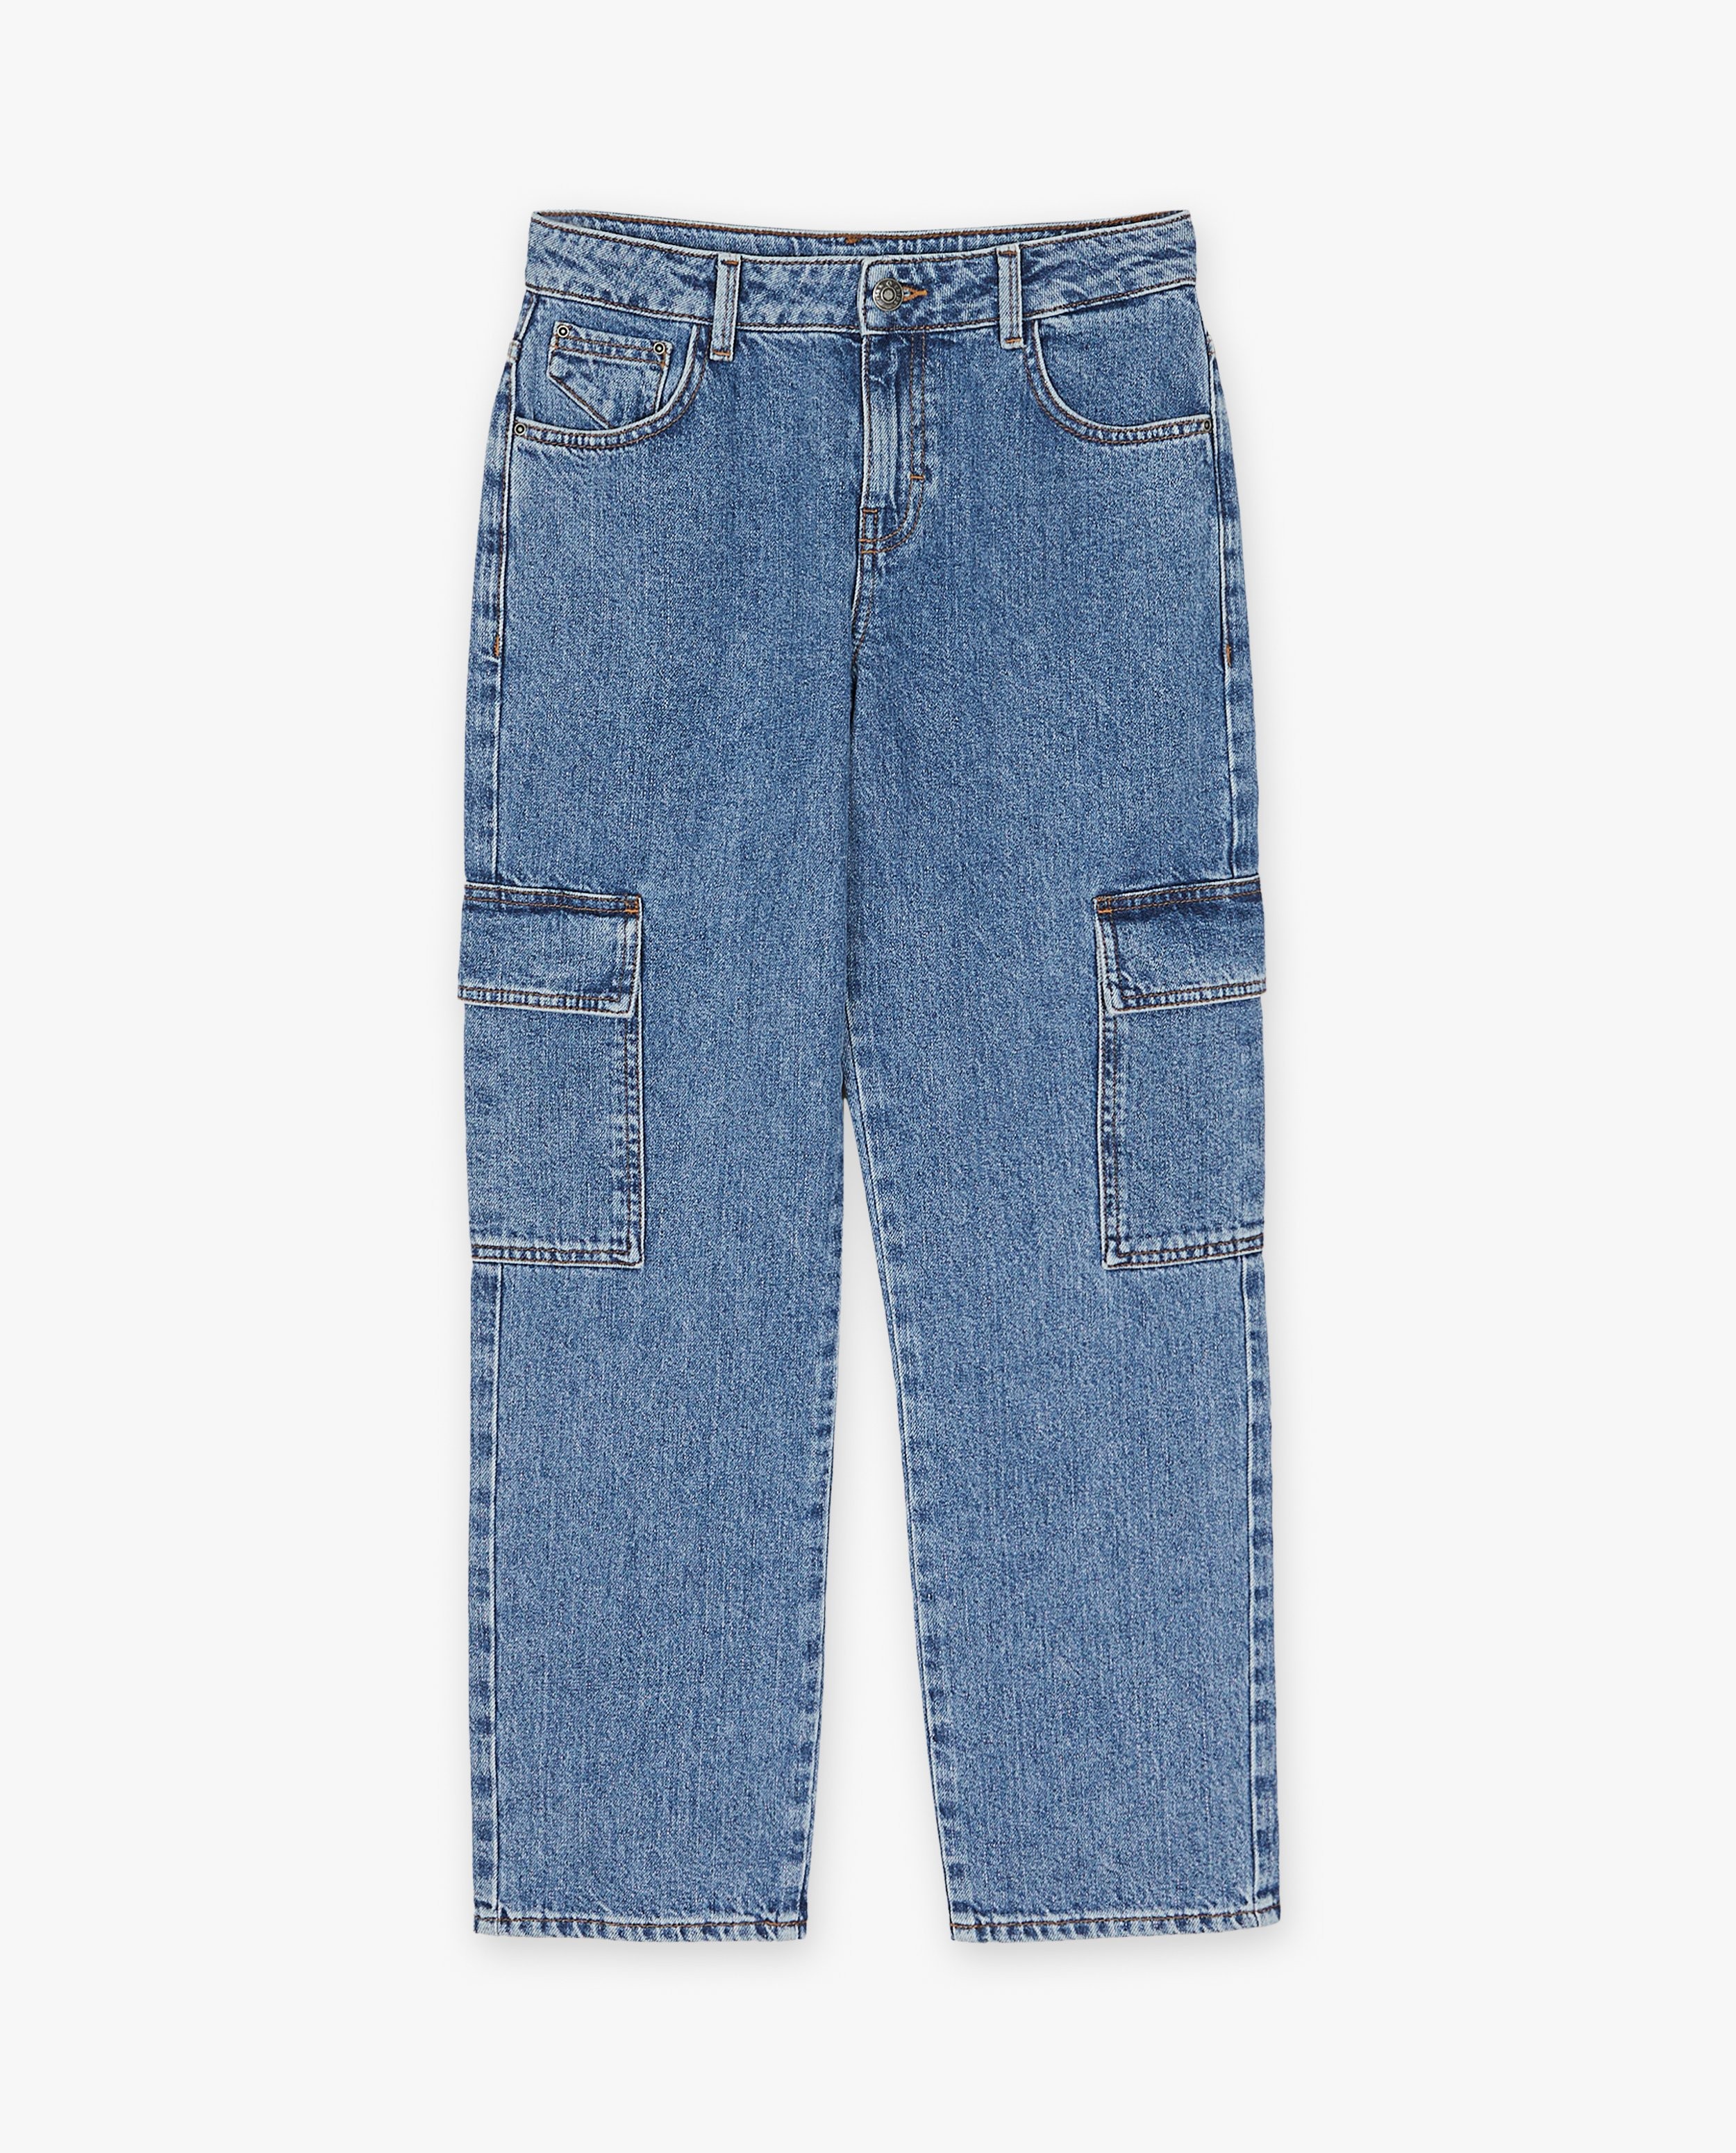 Jeans - Blauwe jeans, cargo fit